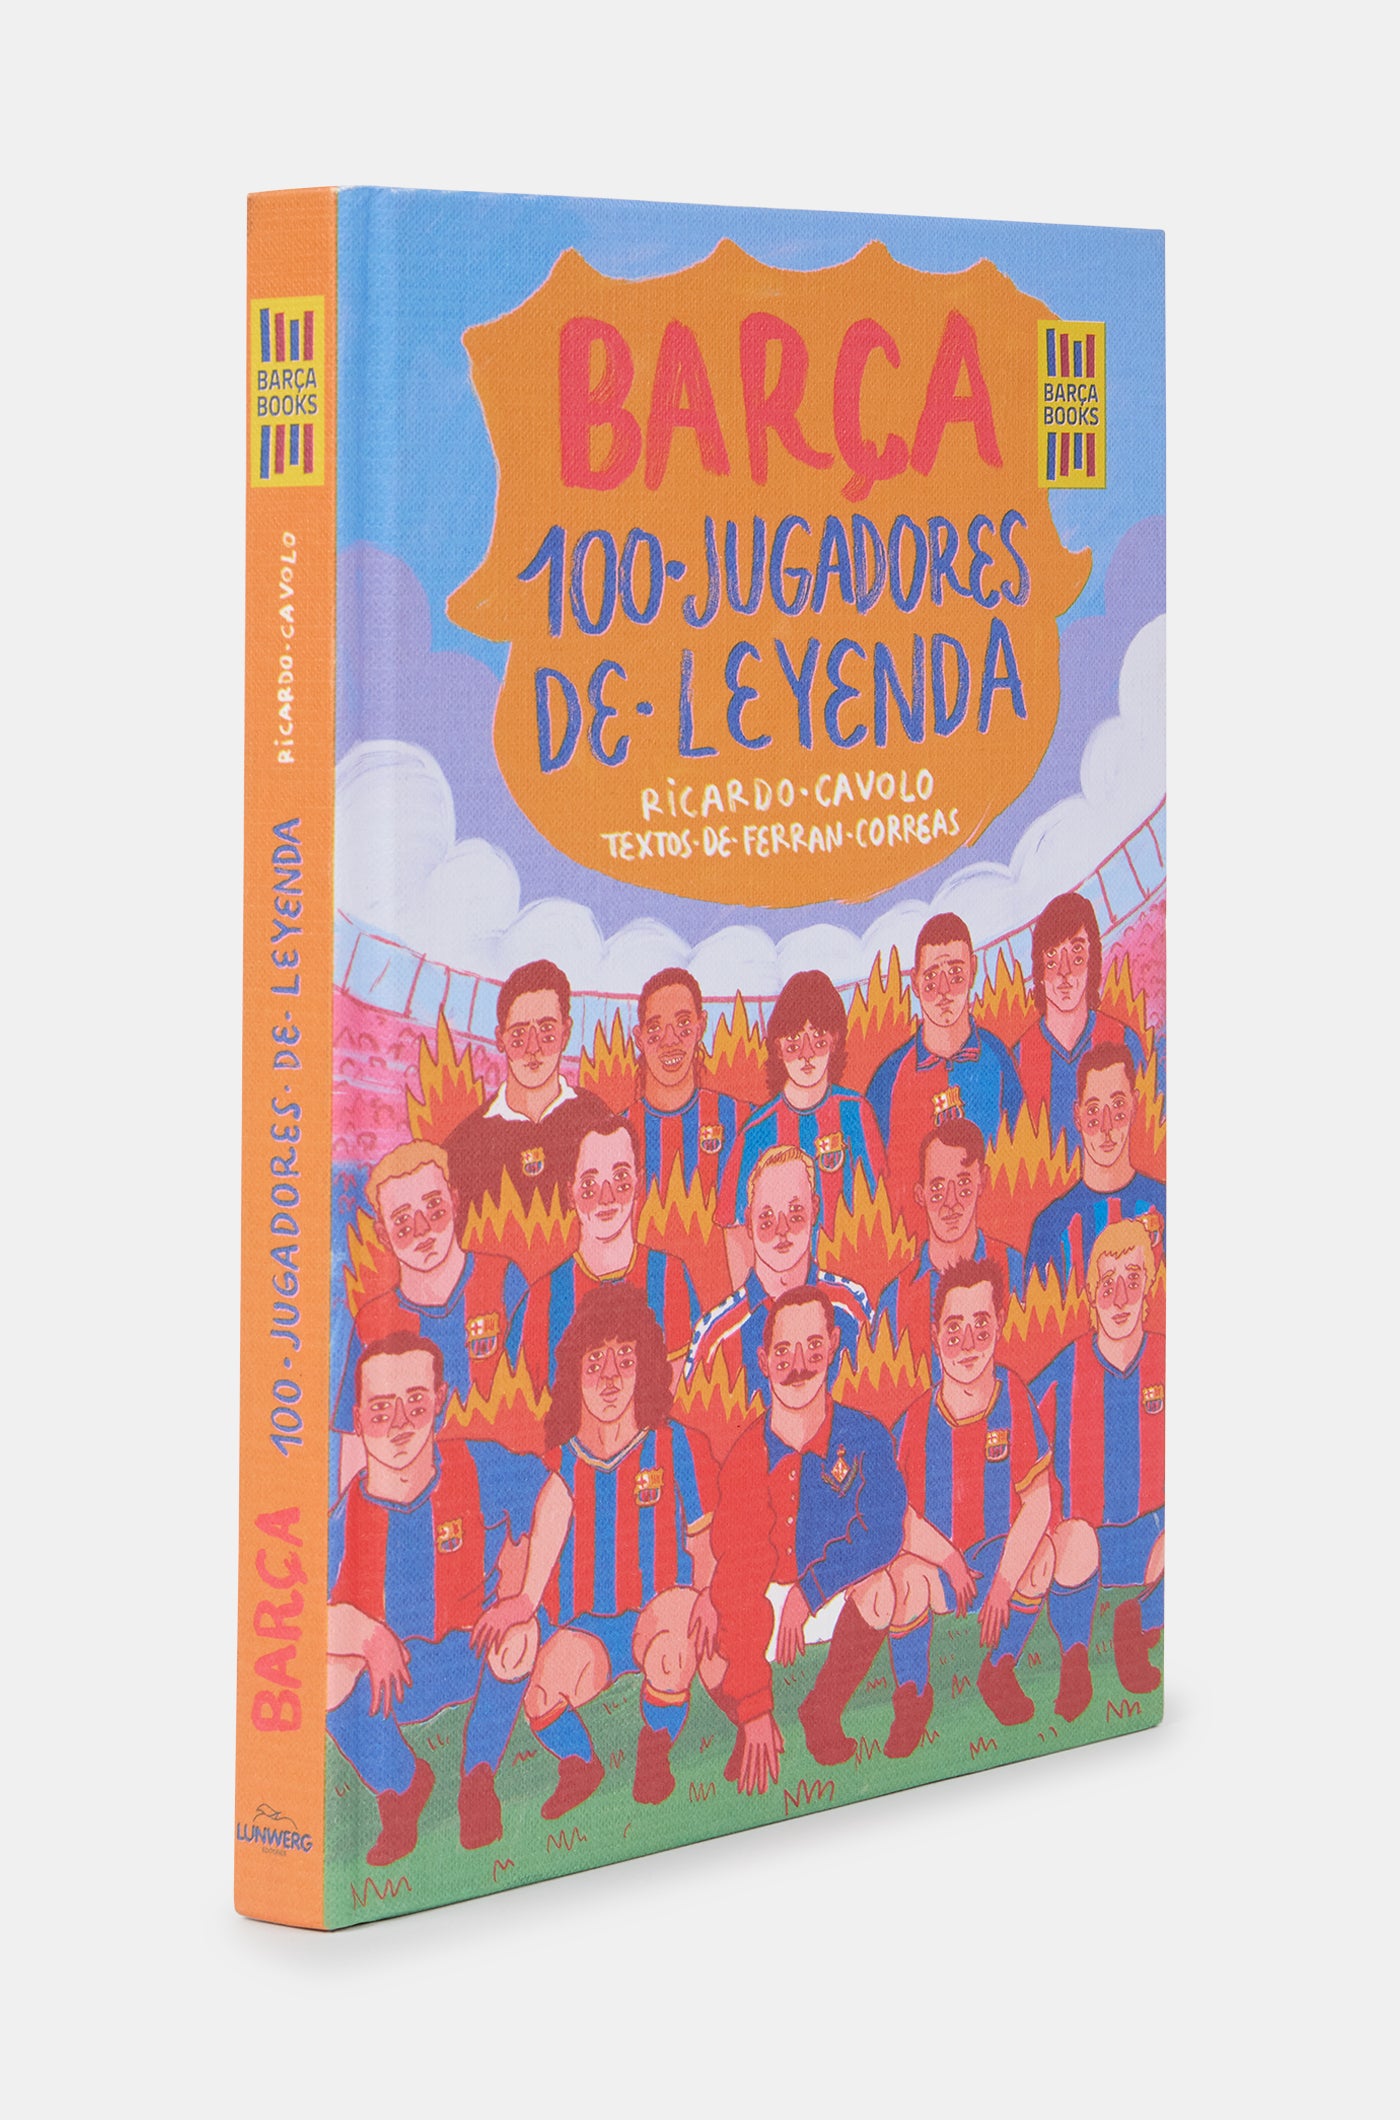 Livre "Barça. 100 jugadores de leyenda"